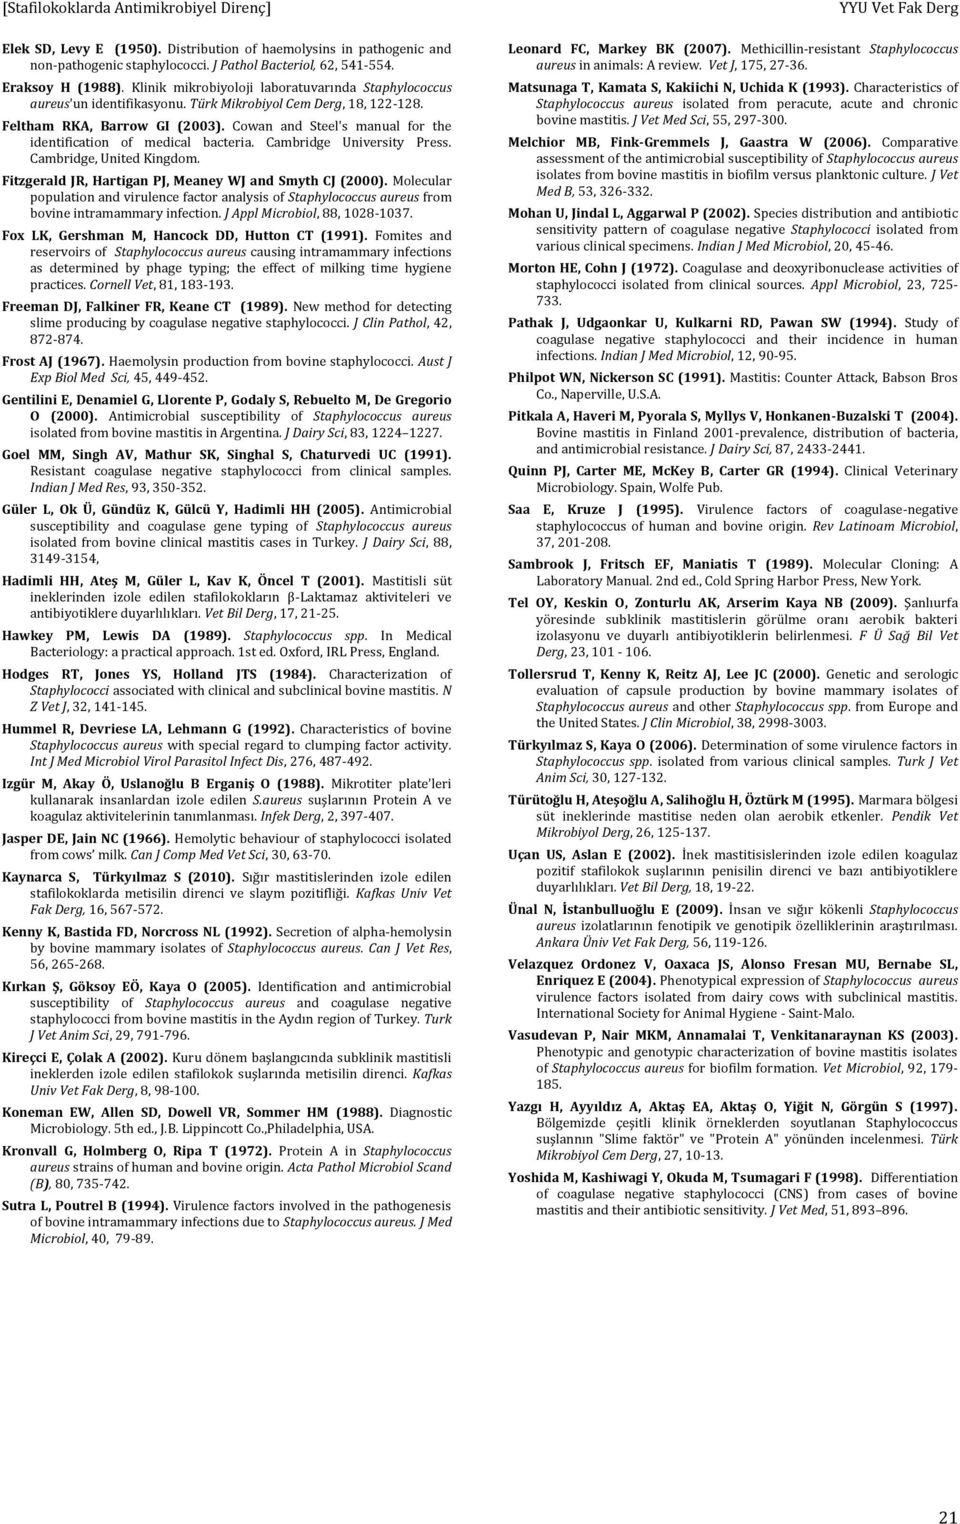 Cowan and Steel's manual for the identification of medical bacteria. Cambridge University Press. Cambridge, United Kingdom. Fitzgerald JR, Hartigan PJ, Meaney WJ and Smyth CJ (2000).